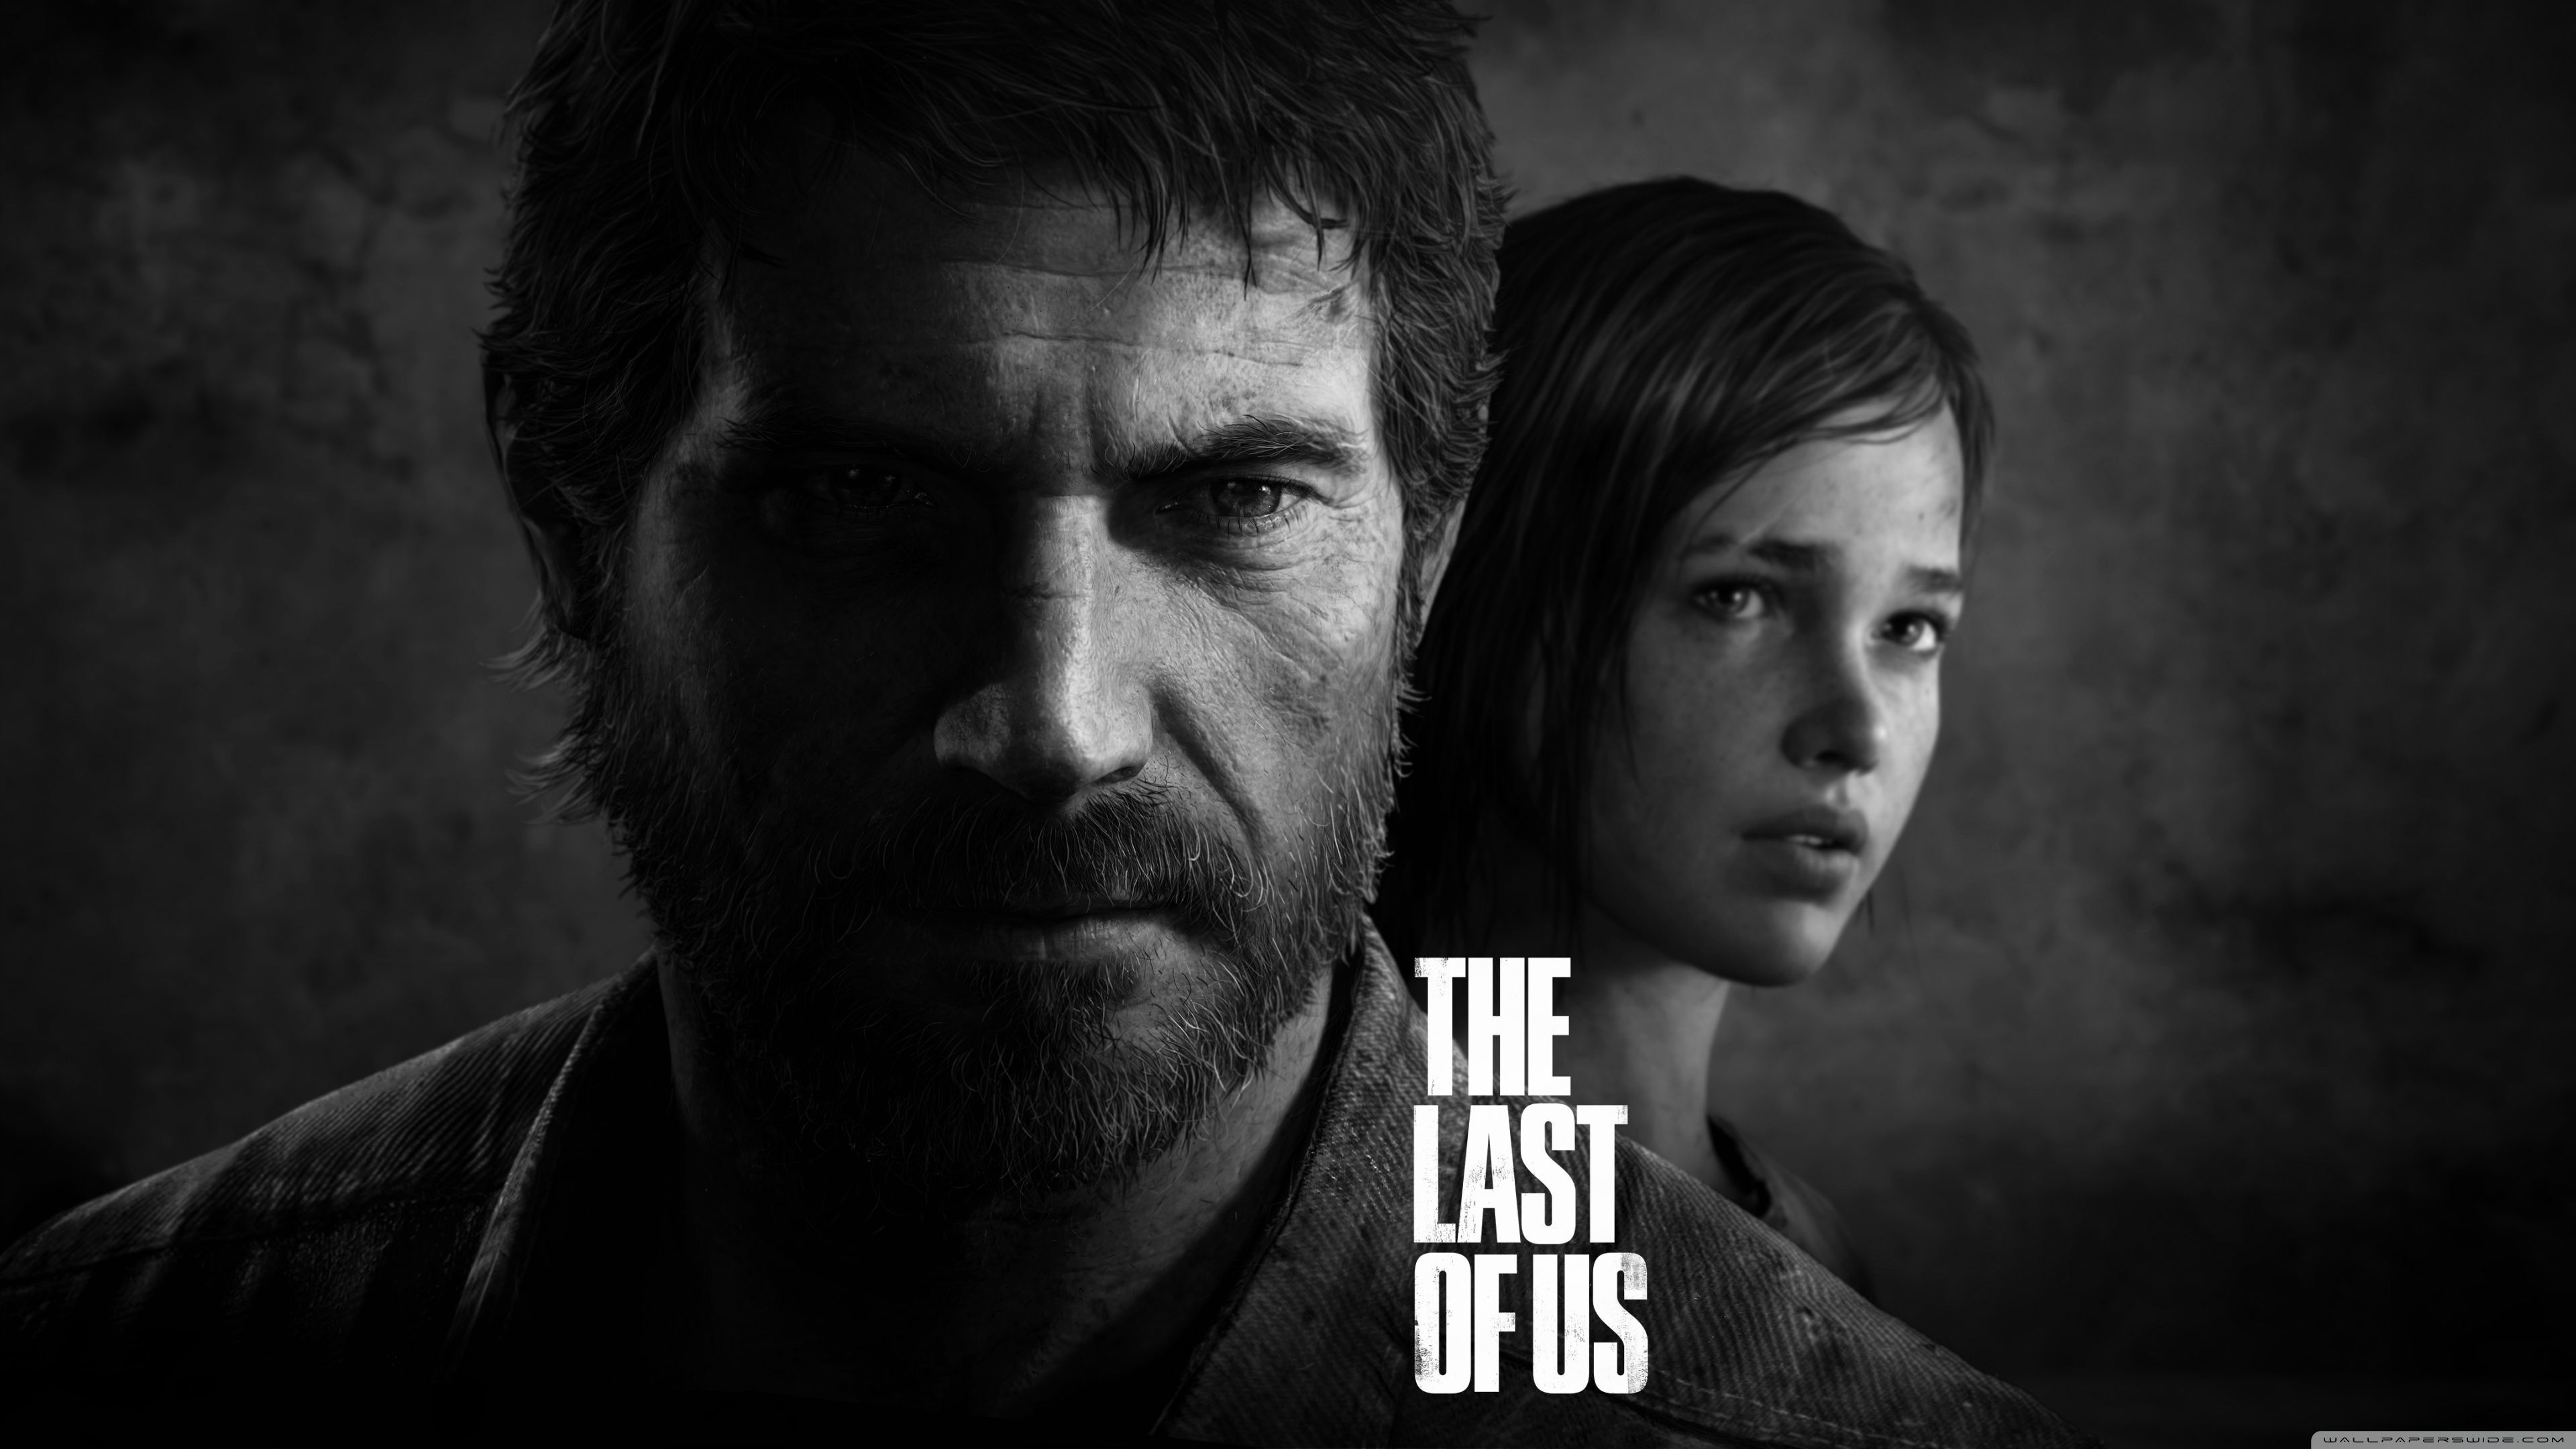 The Last of Us 4K Wallpaper Free The Last of Us 4K